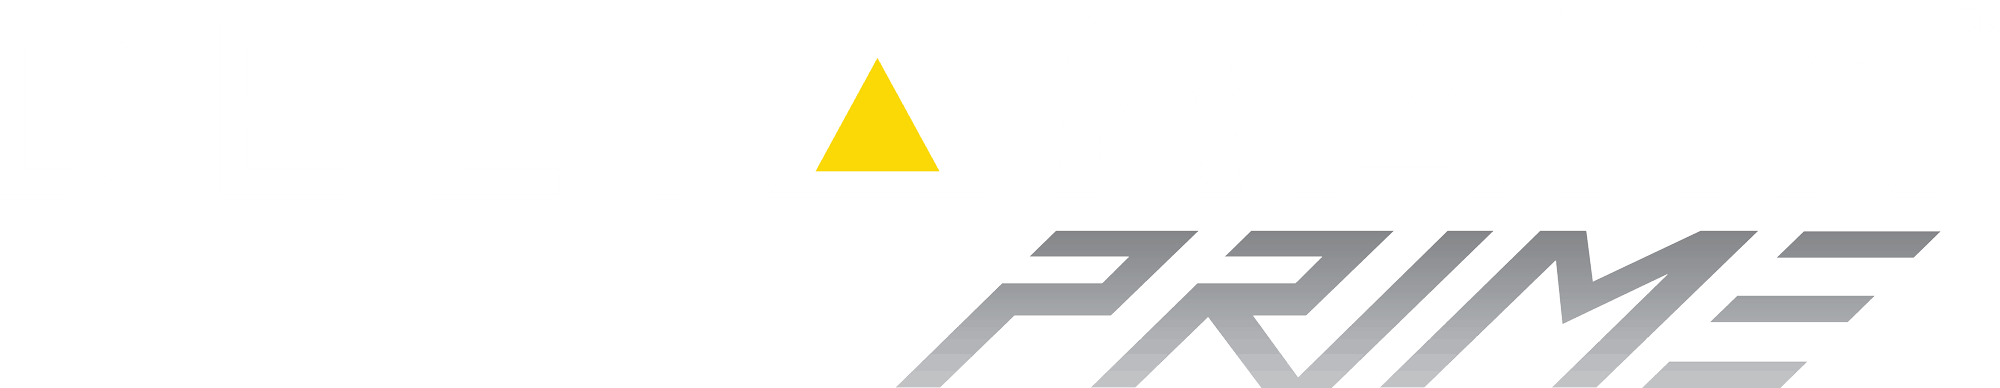 DeltaMAXX Prime cartridge filter logo